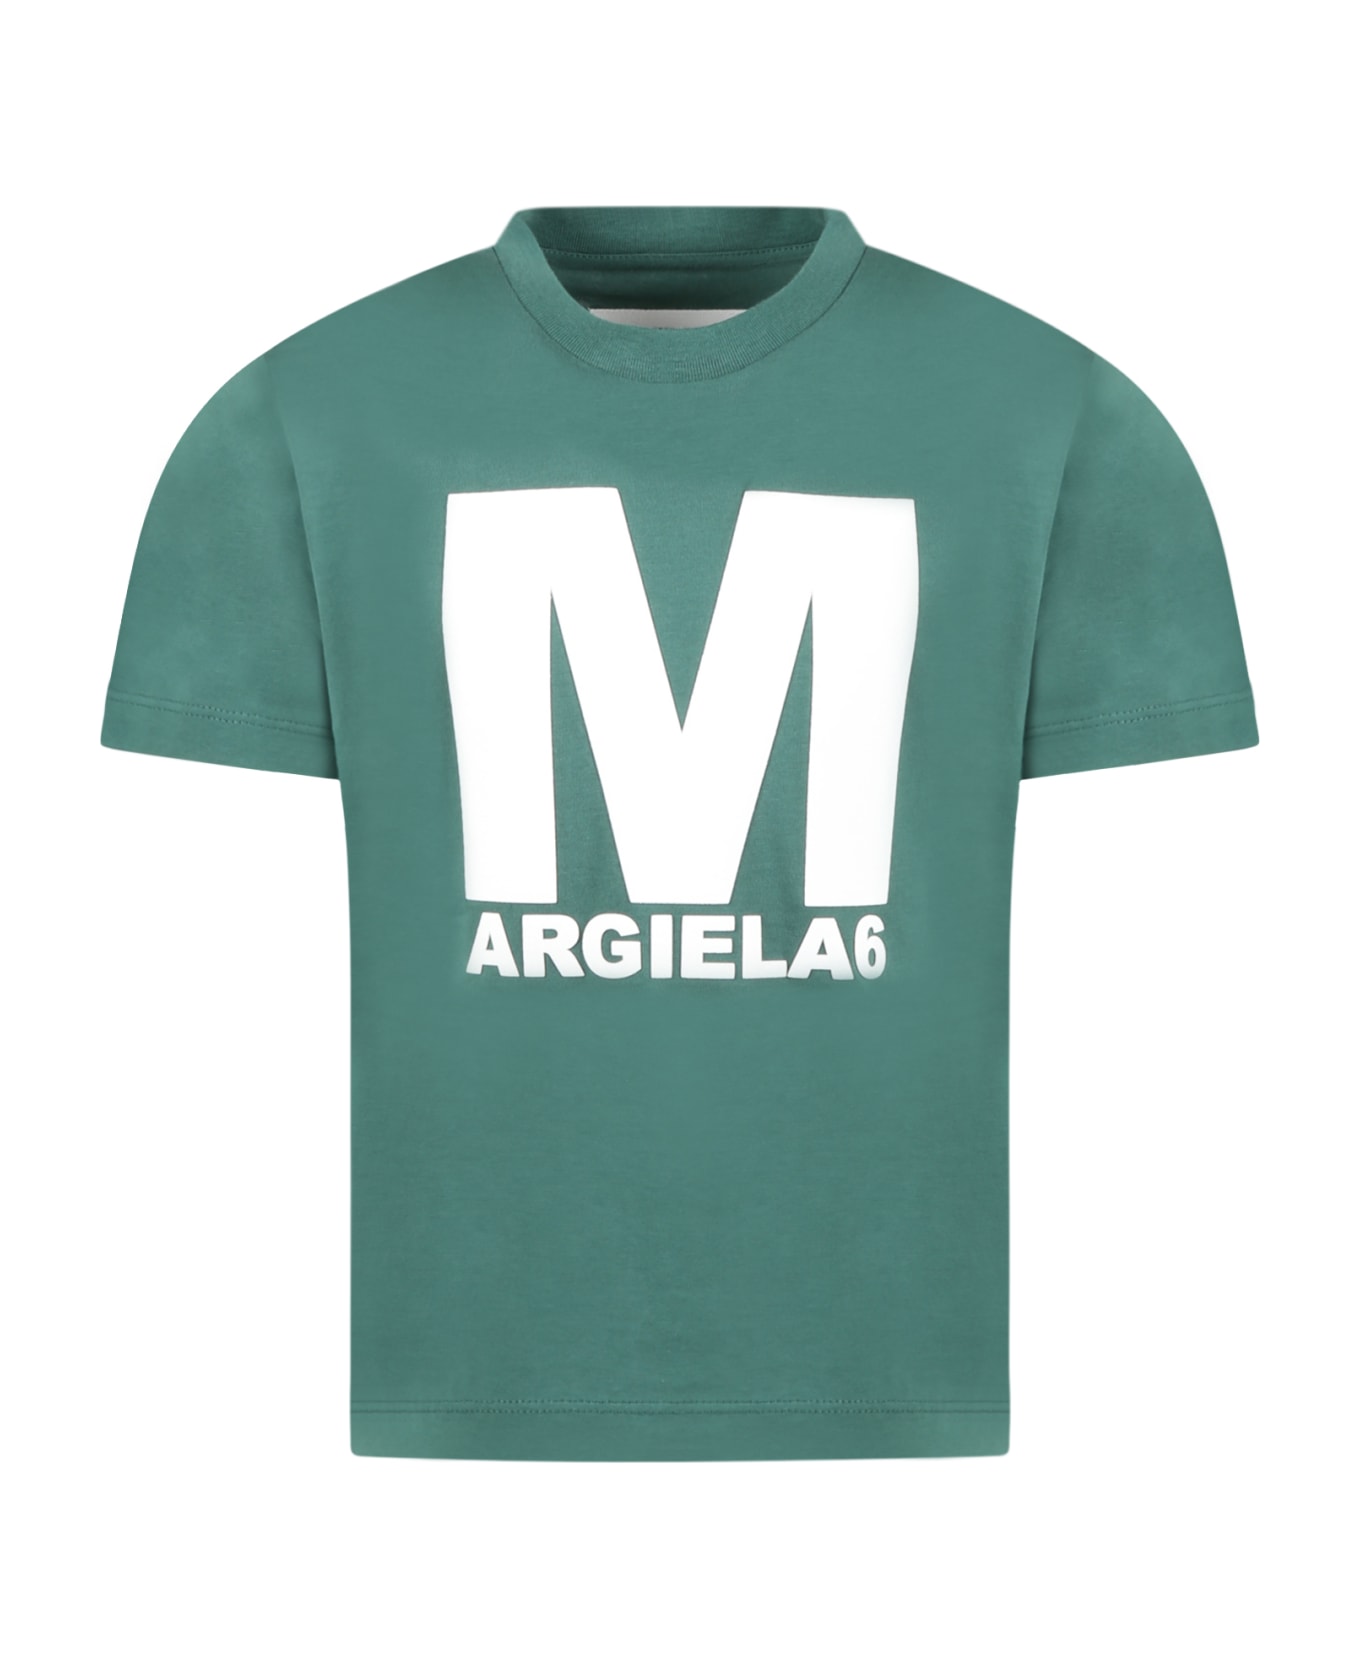 MM6 Maison Margiela Green T-shirt For Kids With White Logo - Green